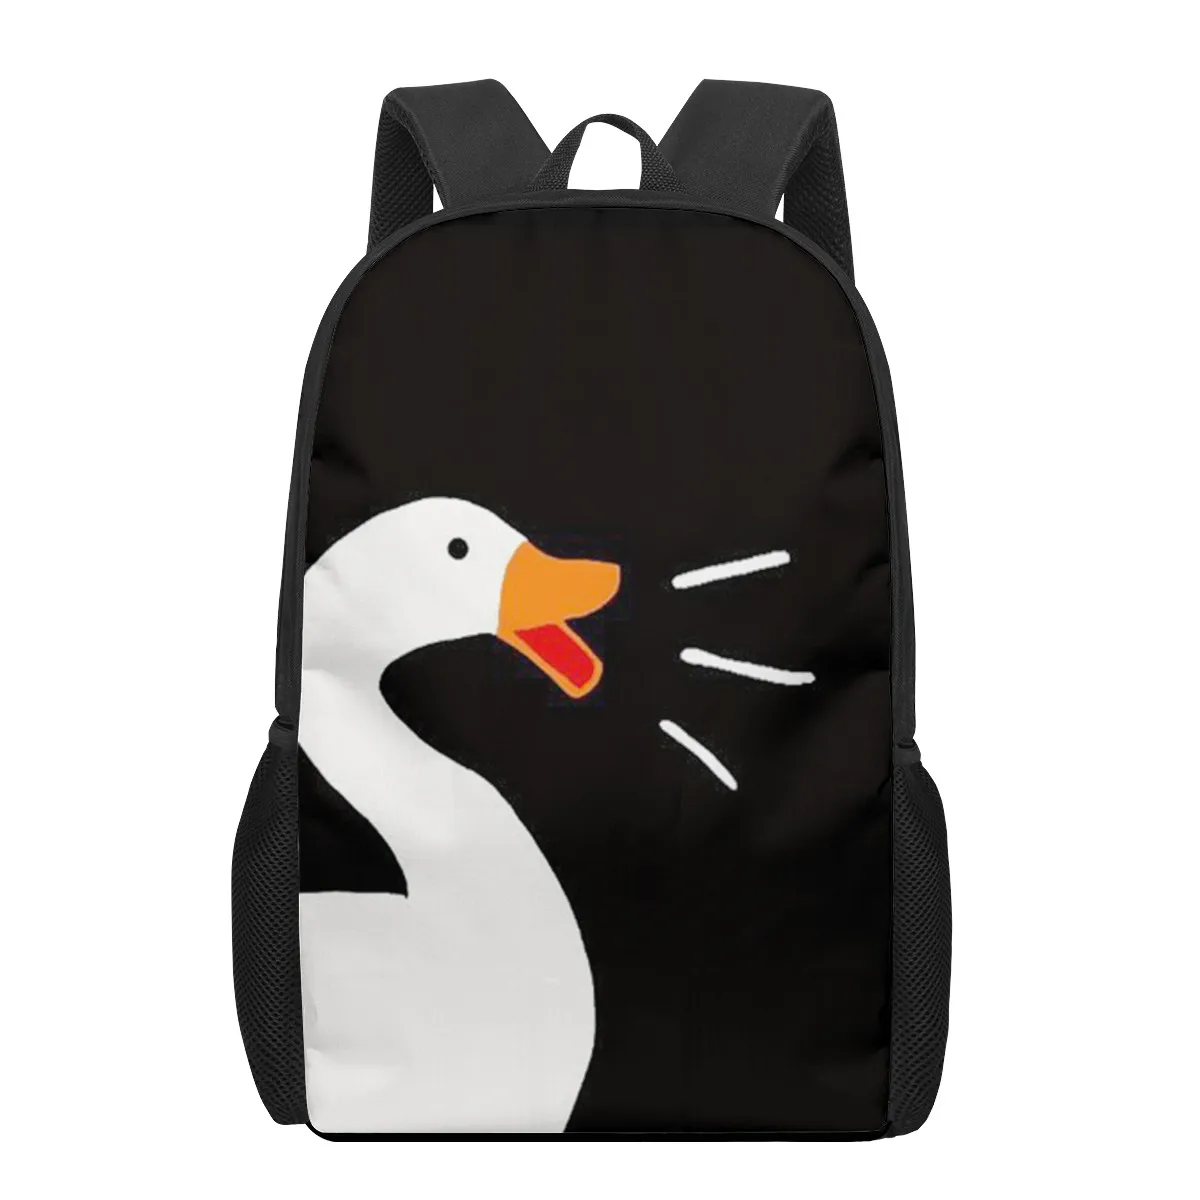 

Untitled Goose Game 3D Print School Bags for Boys Girls Primary Students Backpacks Kids Book Bag Satchel Back Pack